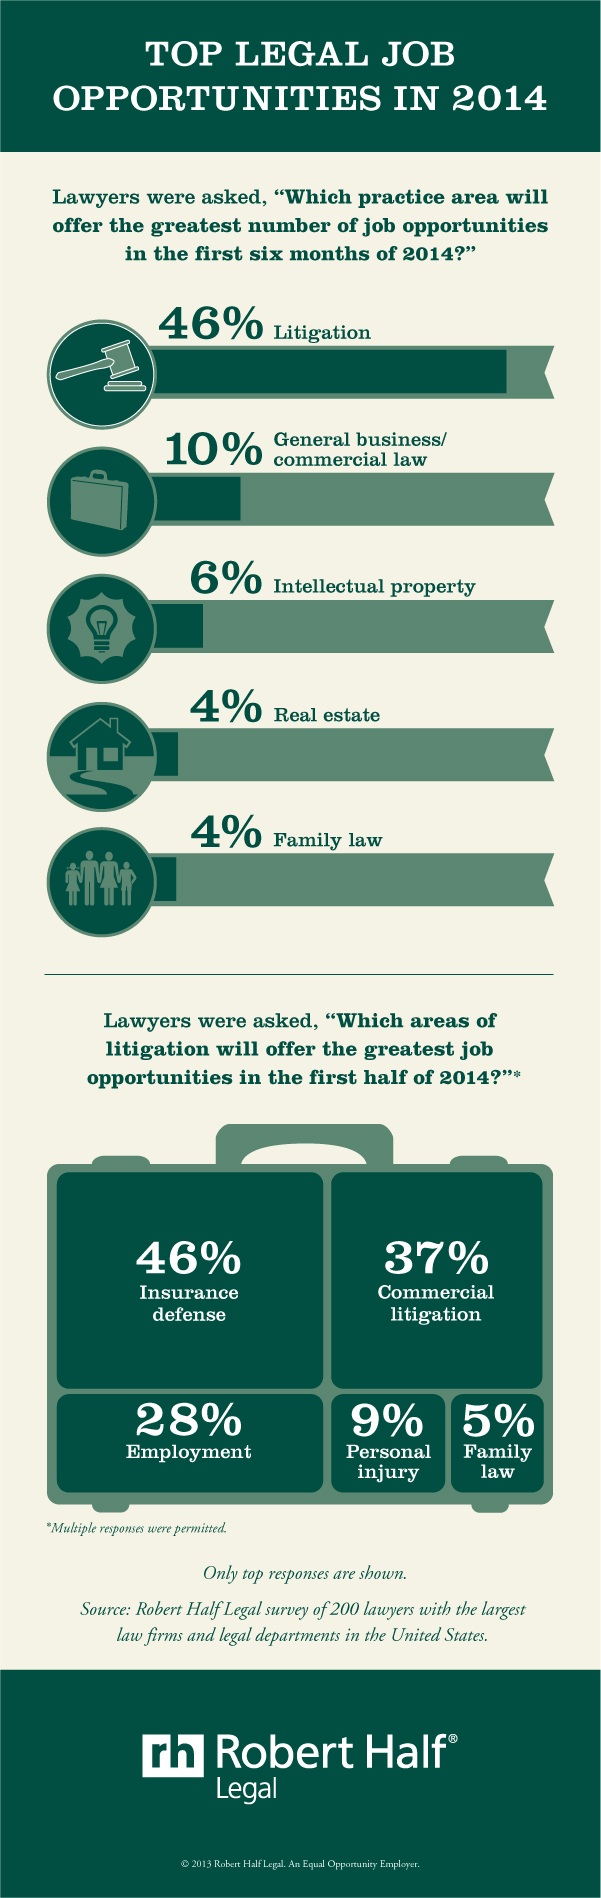 "Top legal job opportunities in 2014" от roberthalf.com